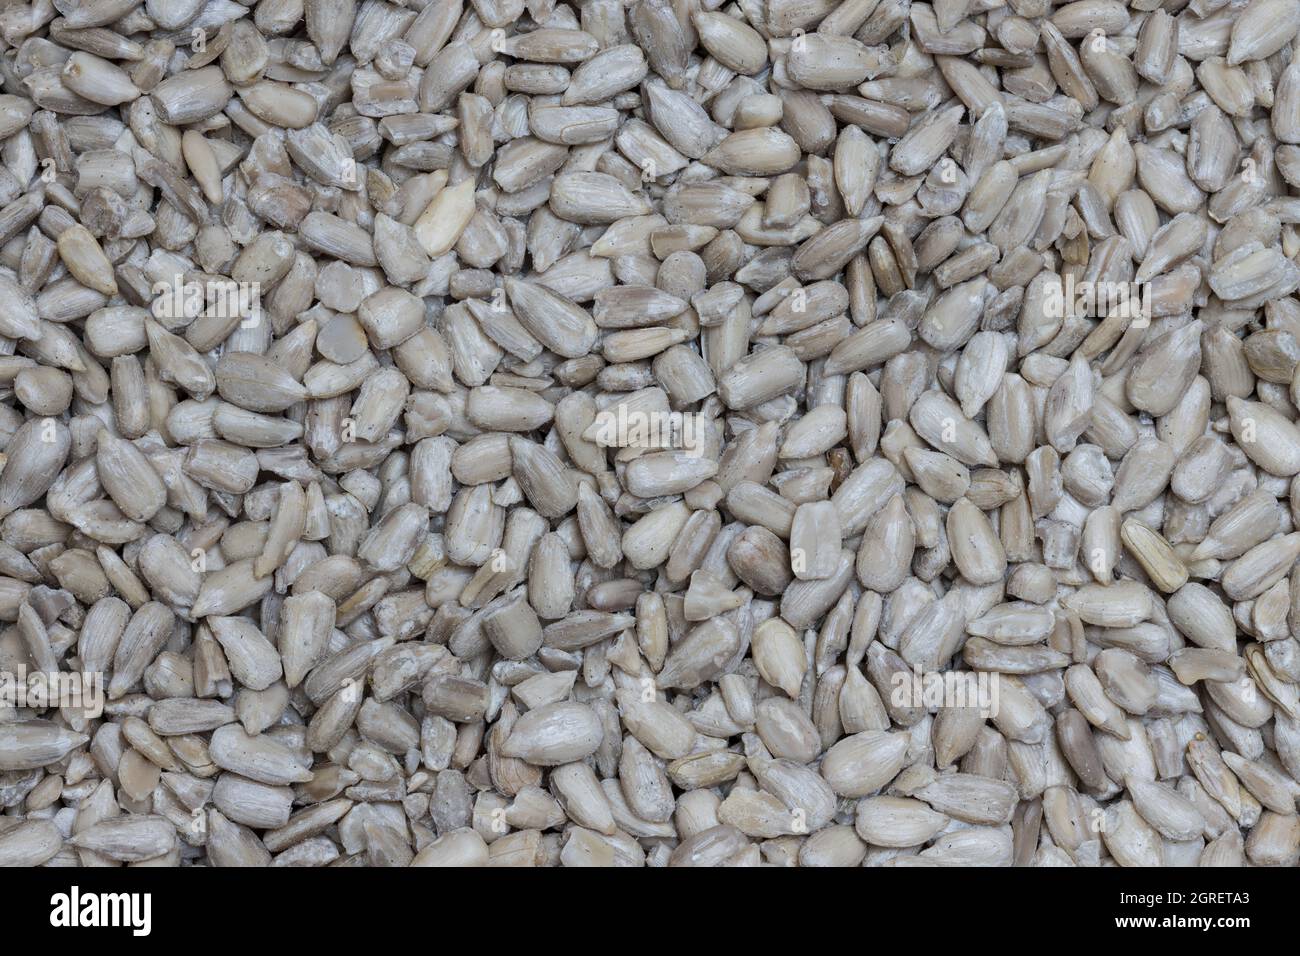 Detalle de primer plano de semillas de girasol. Foto de stock